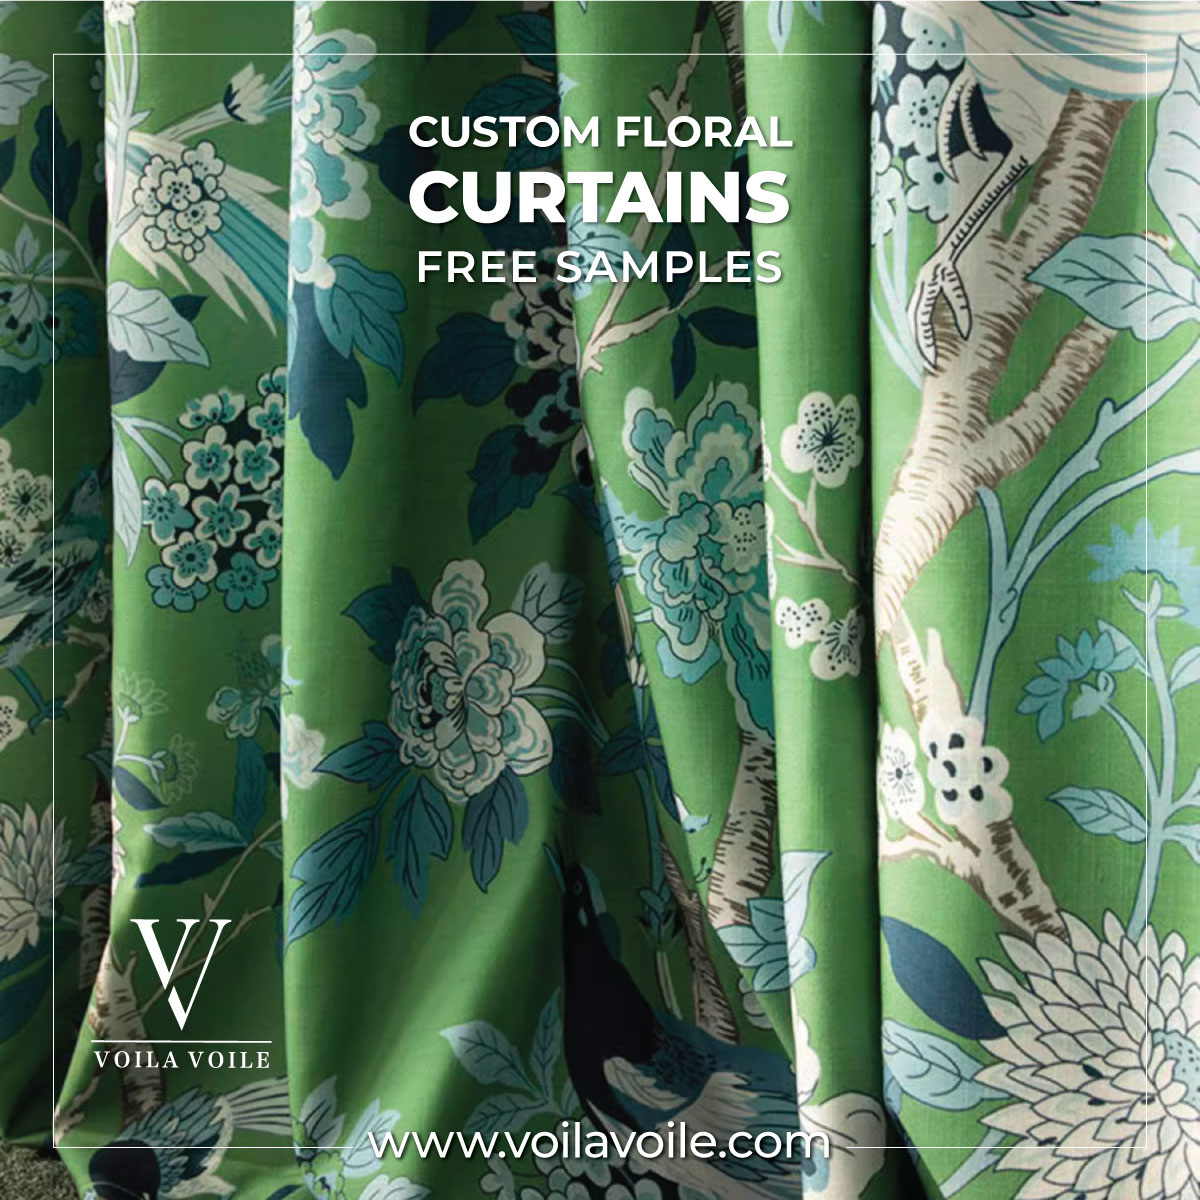 Floral Velvet Curtains